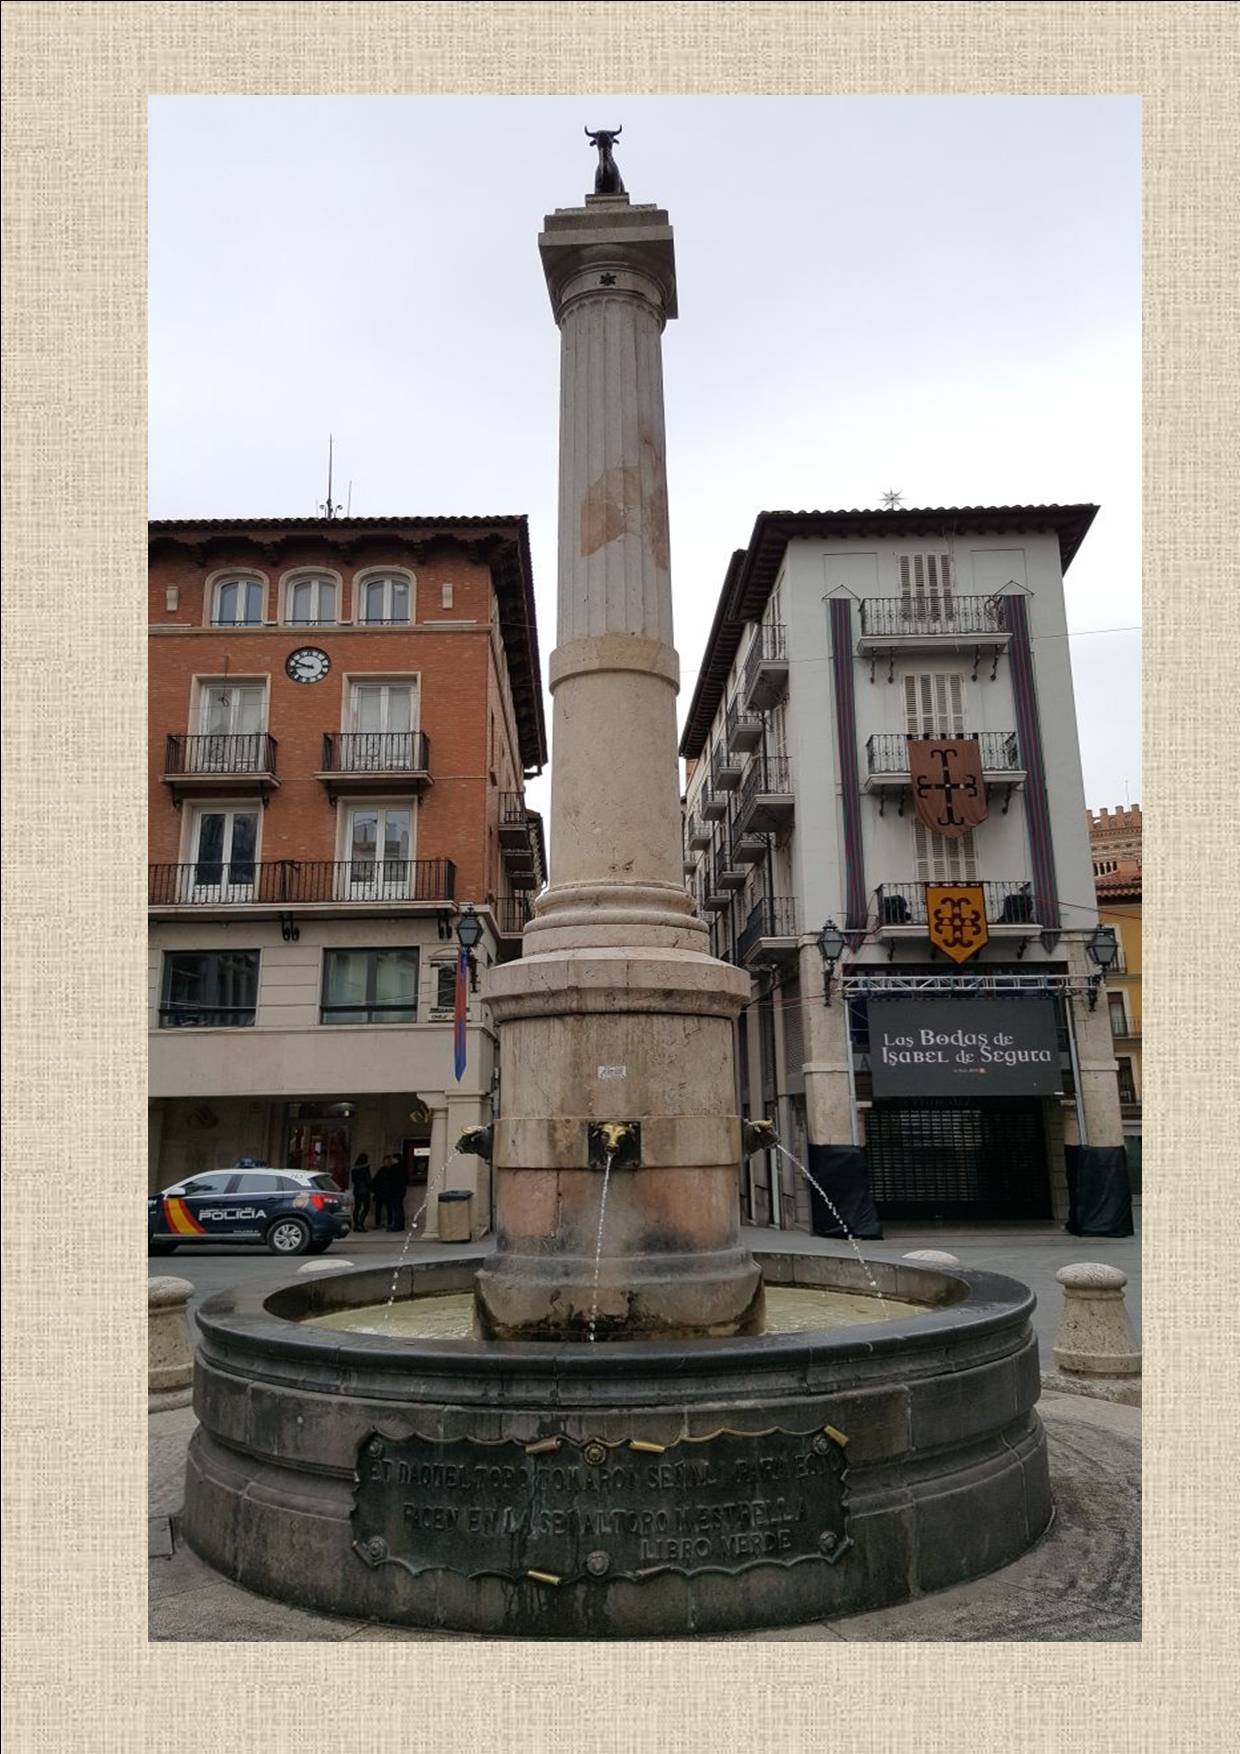 #Teruel #Medieval #BodasDeIsabel #AmantesDeTeruel